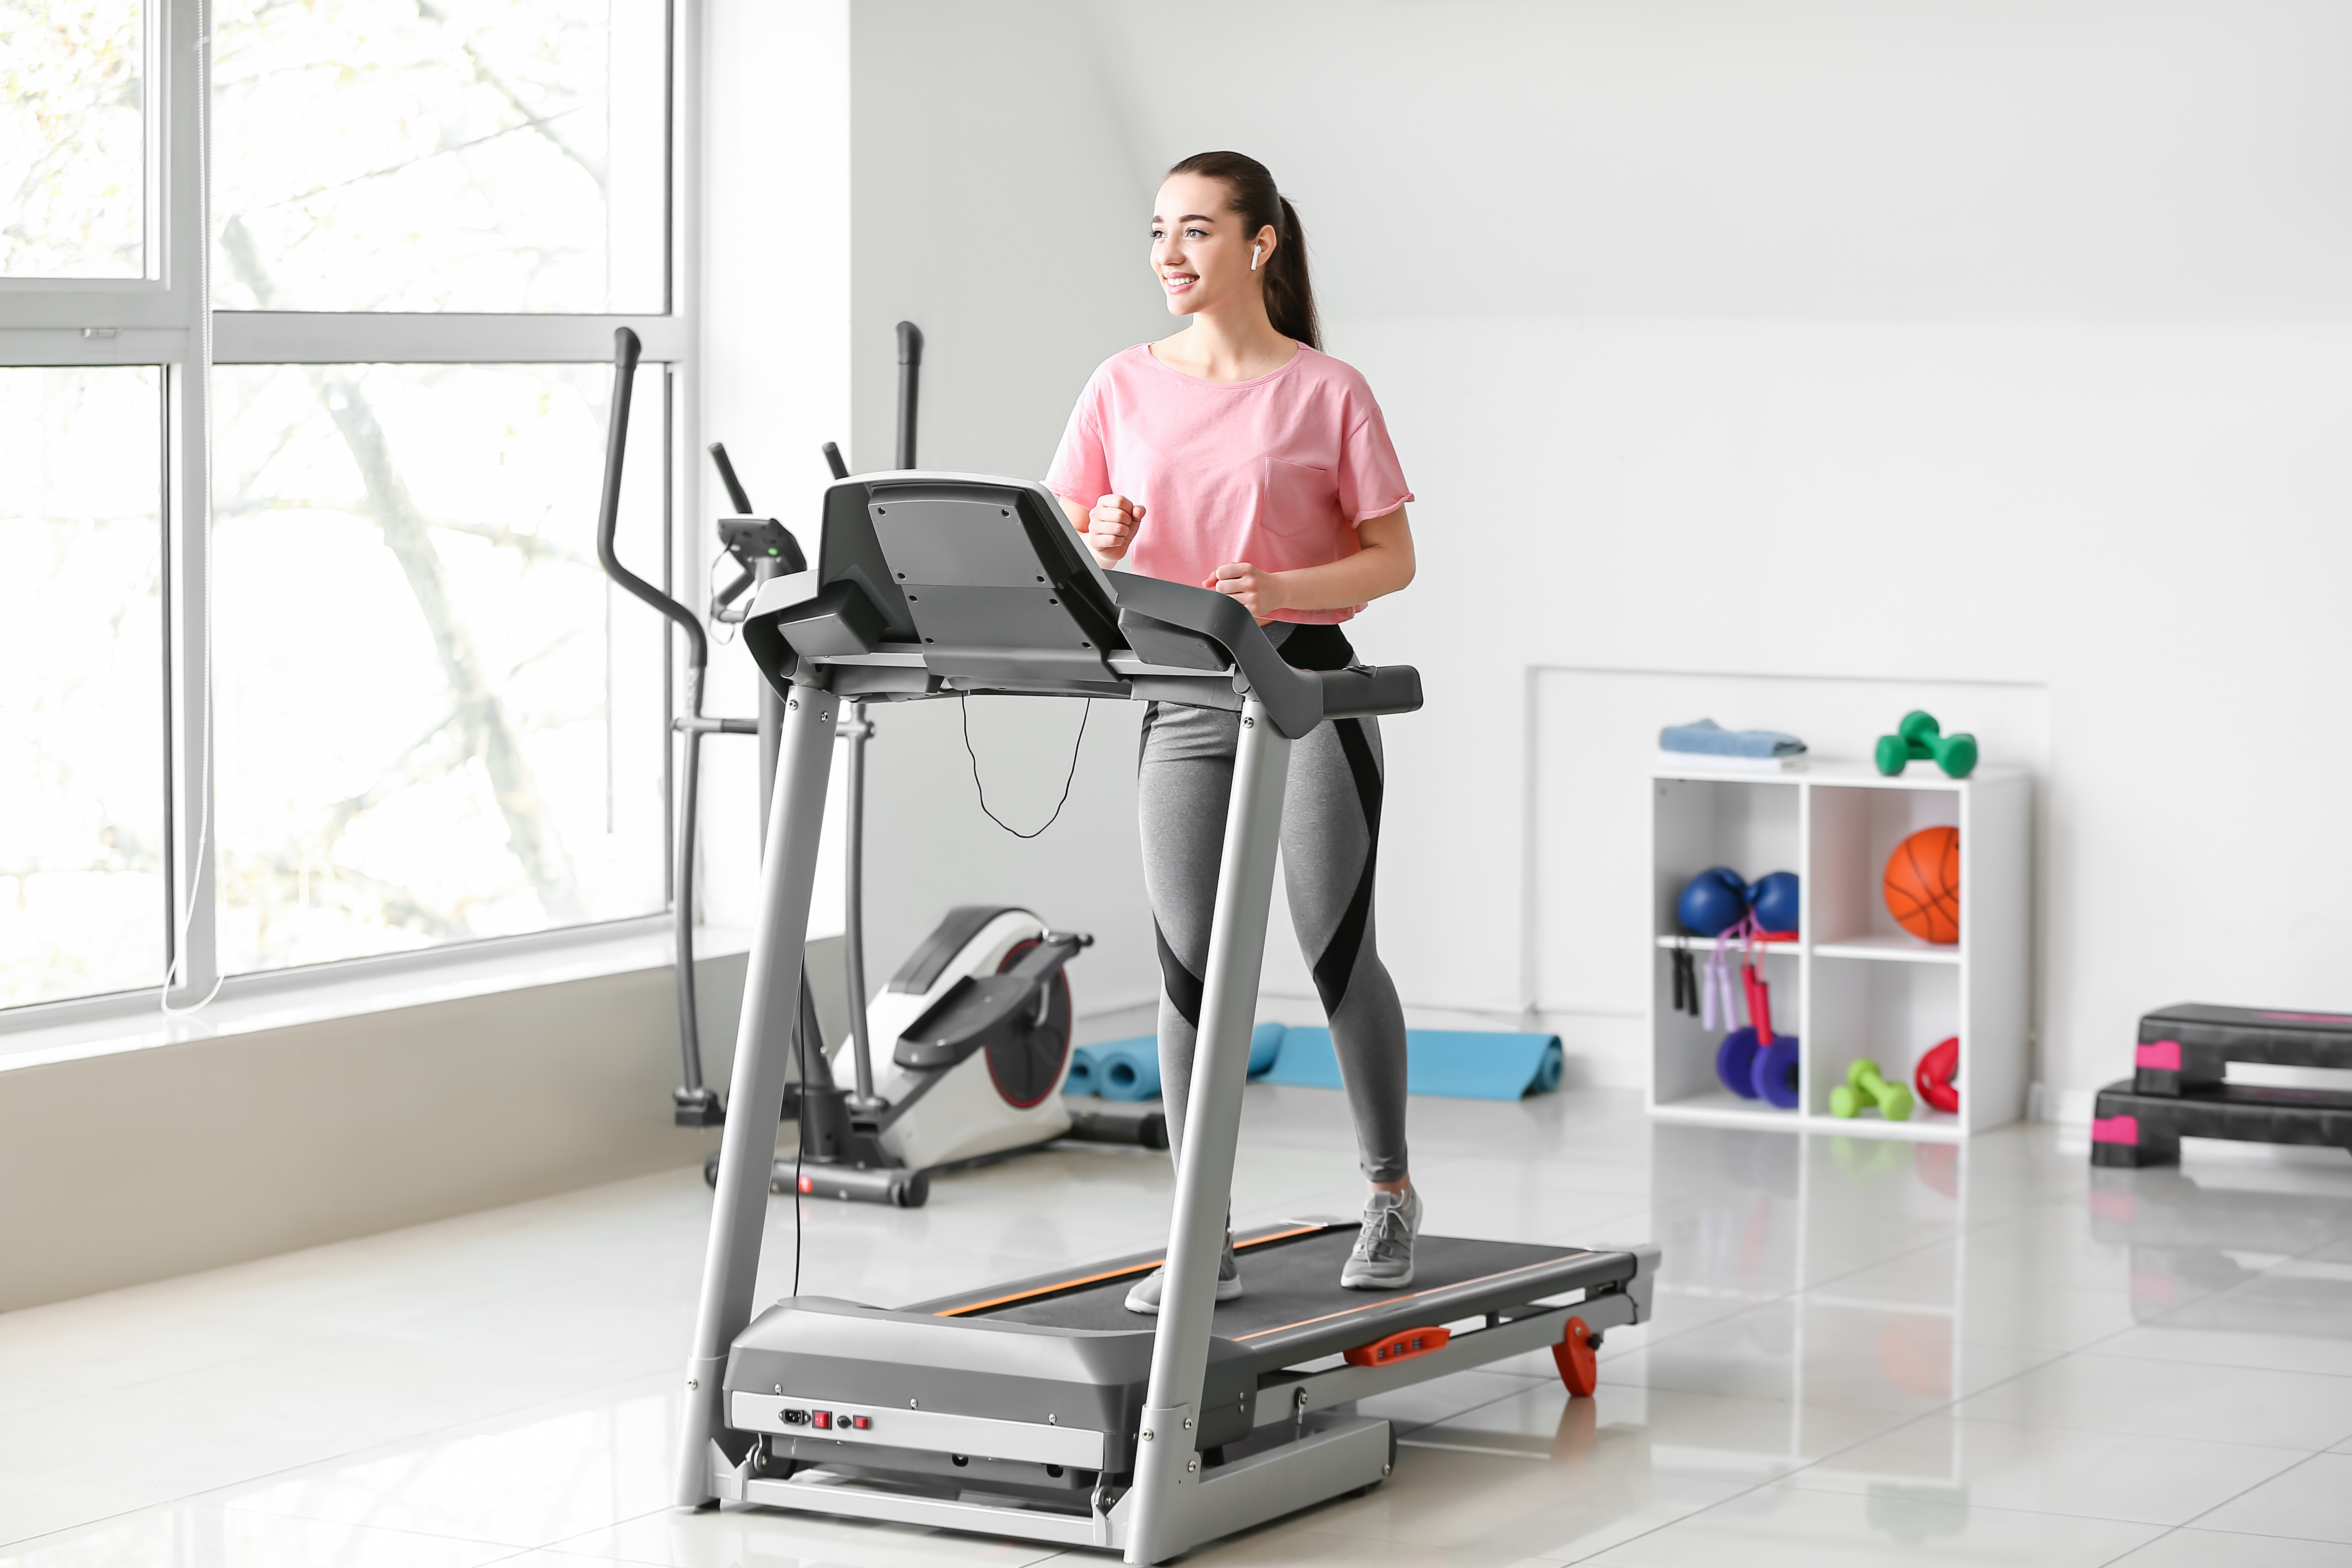 Woman wearing pink shirt walking on treadmill